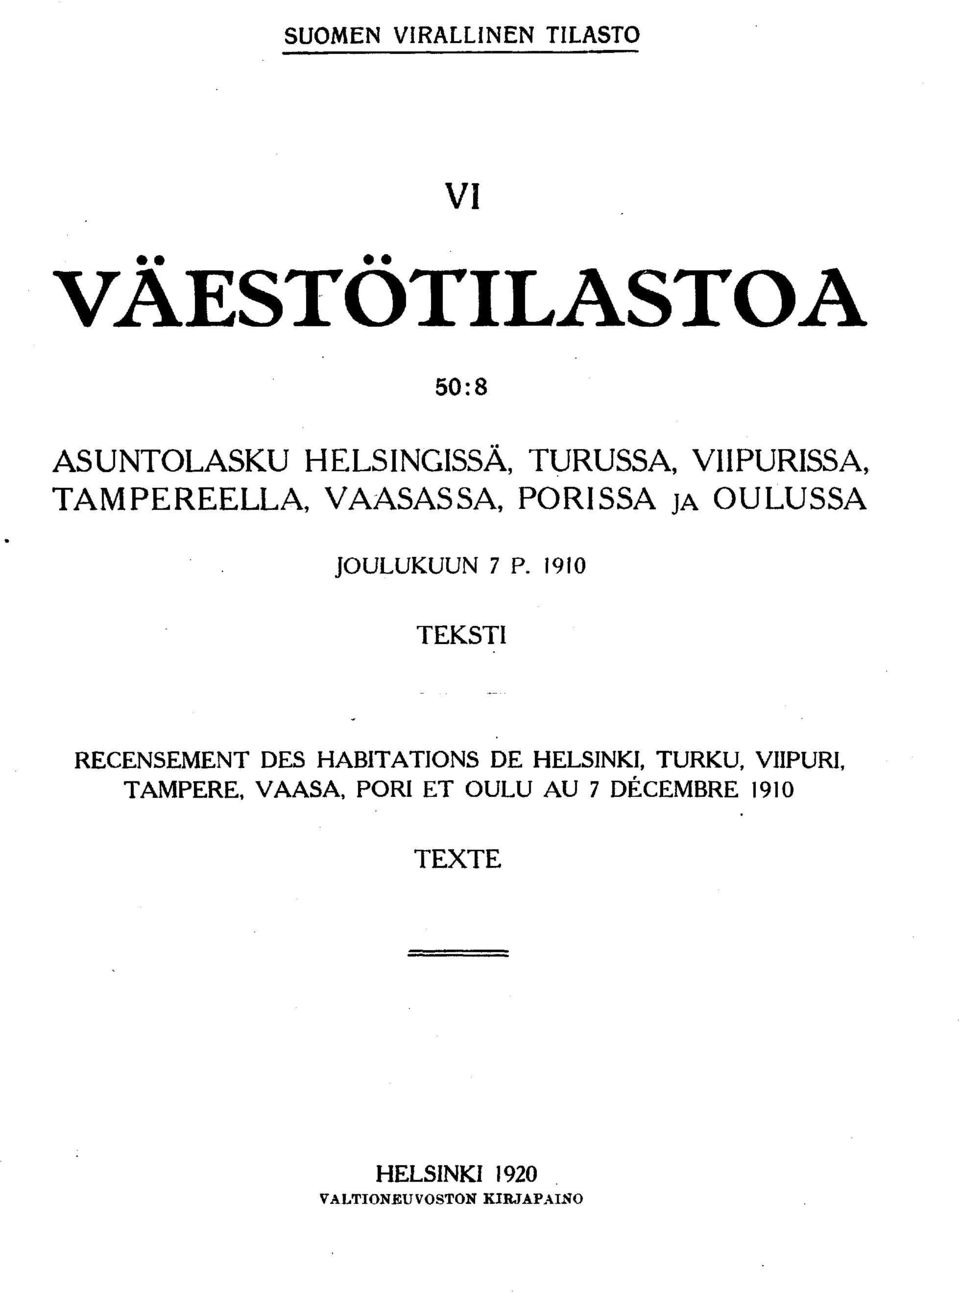 1910 TEKSTI RECENSEMENT DES HABITATIONS DE HELSINKI, TURKU, VIIPURI, TAMPERE,